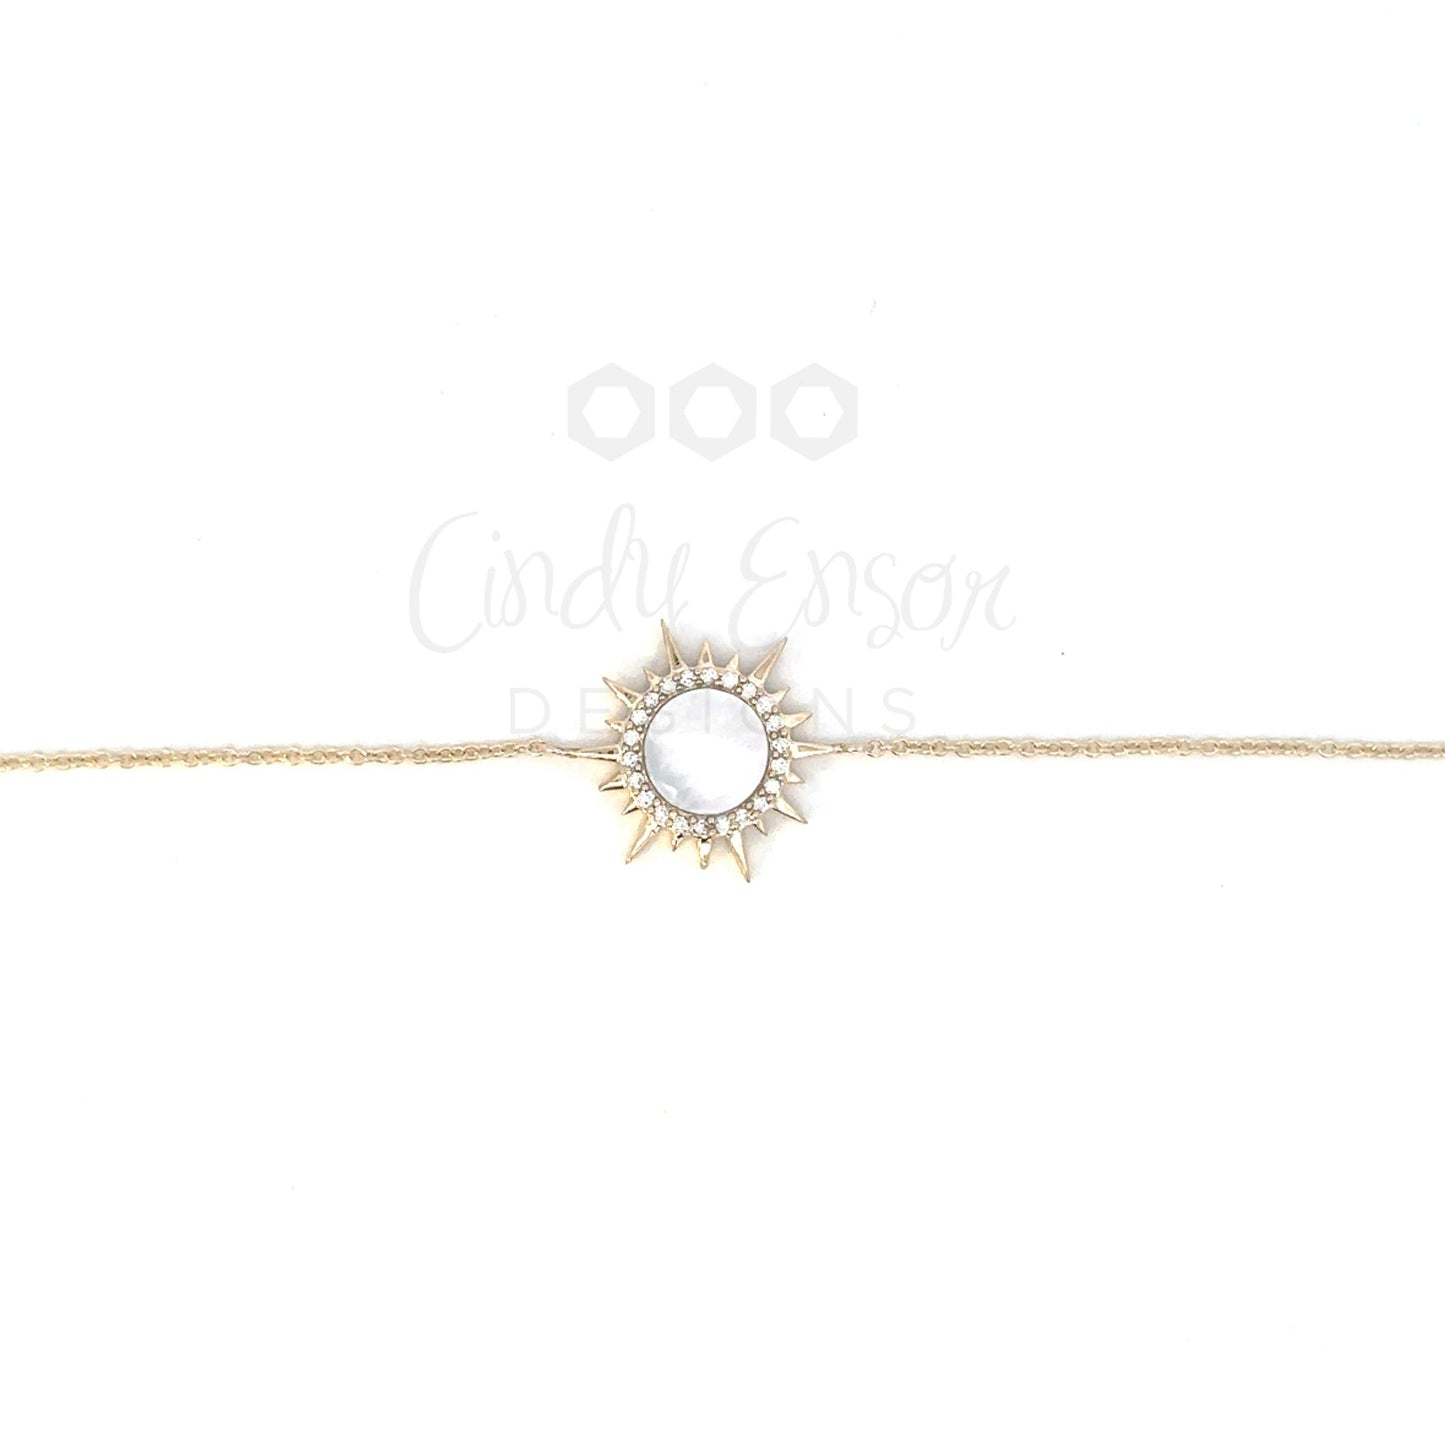 White Mother of Pearl Sunburst Bracelet with Pave Diamonds